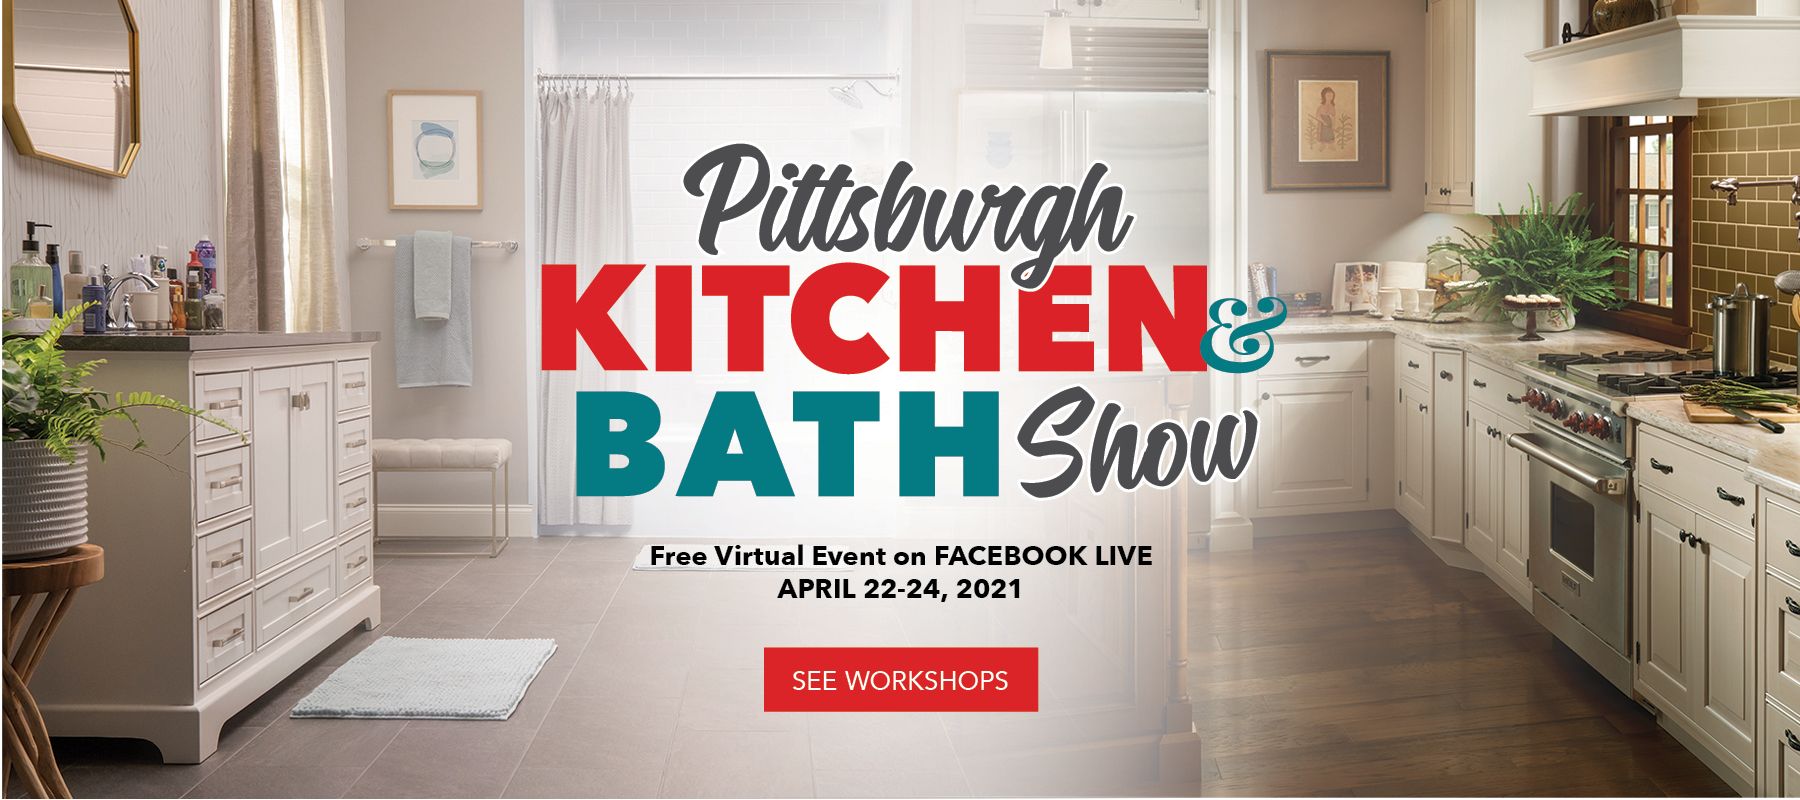 Pgh Kitchen Bath Show Jpg 